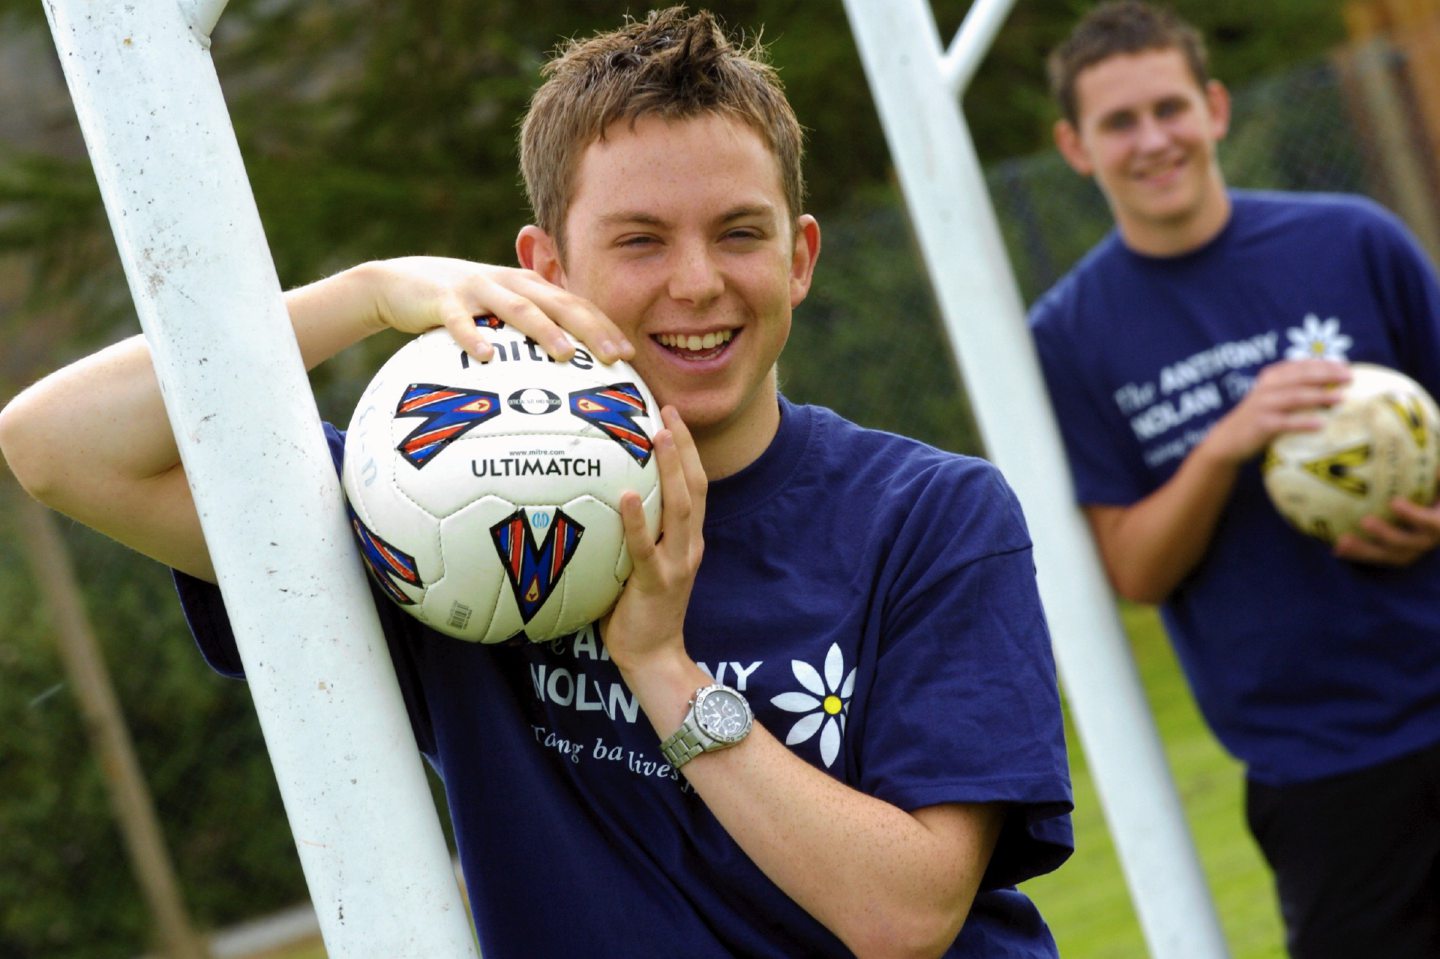 Two pupils holding footballs